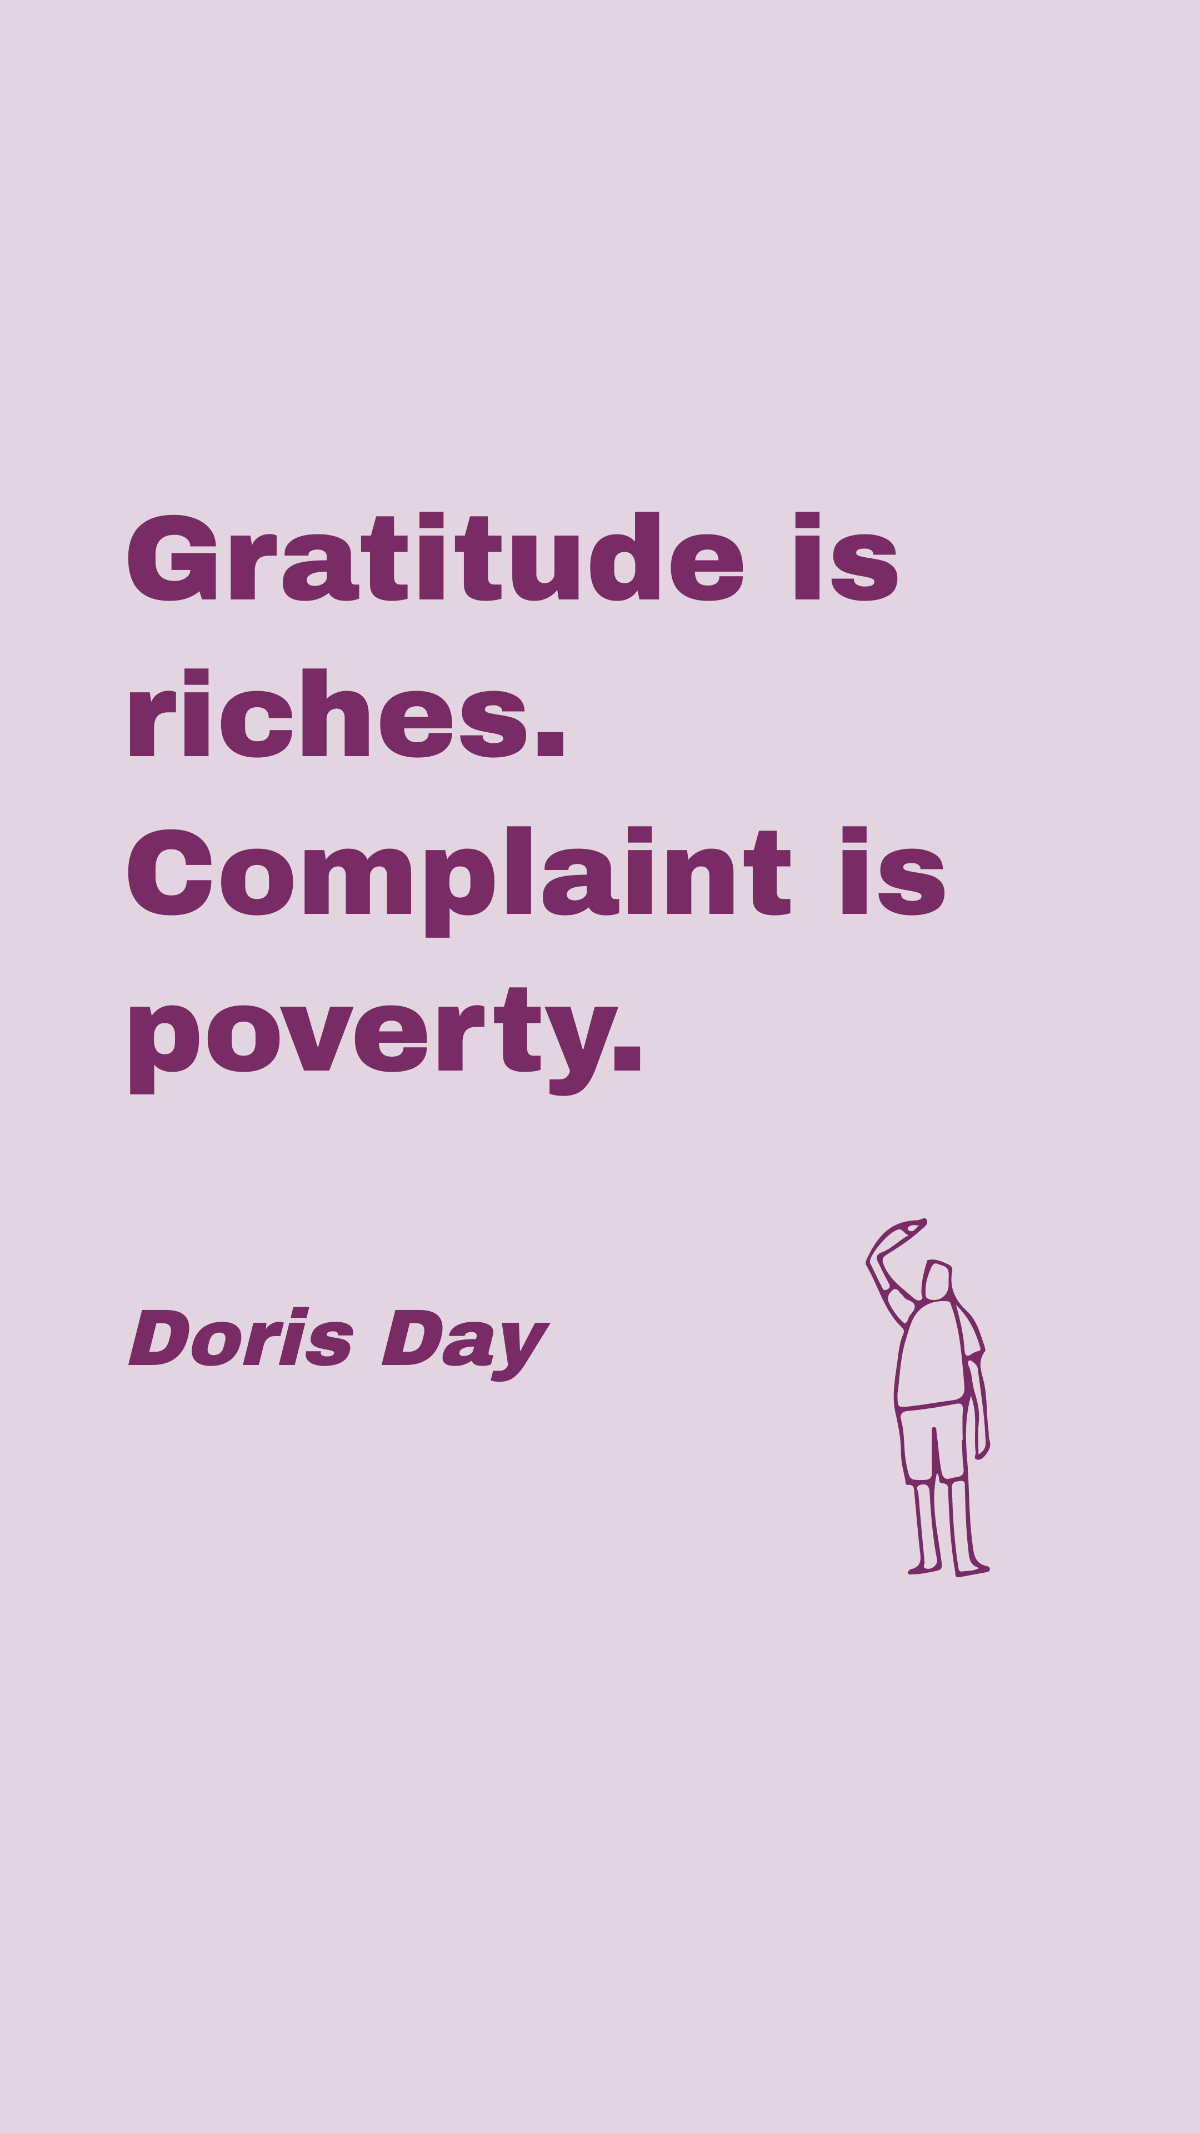 Doris Day - Gratitude is riches. Complaint is poverty.